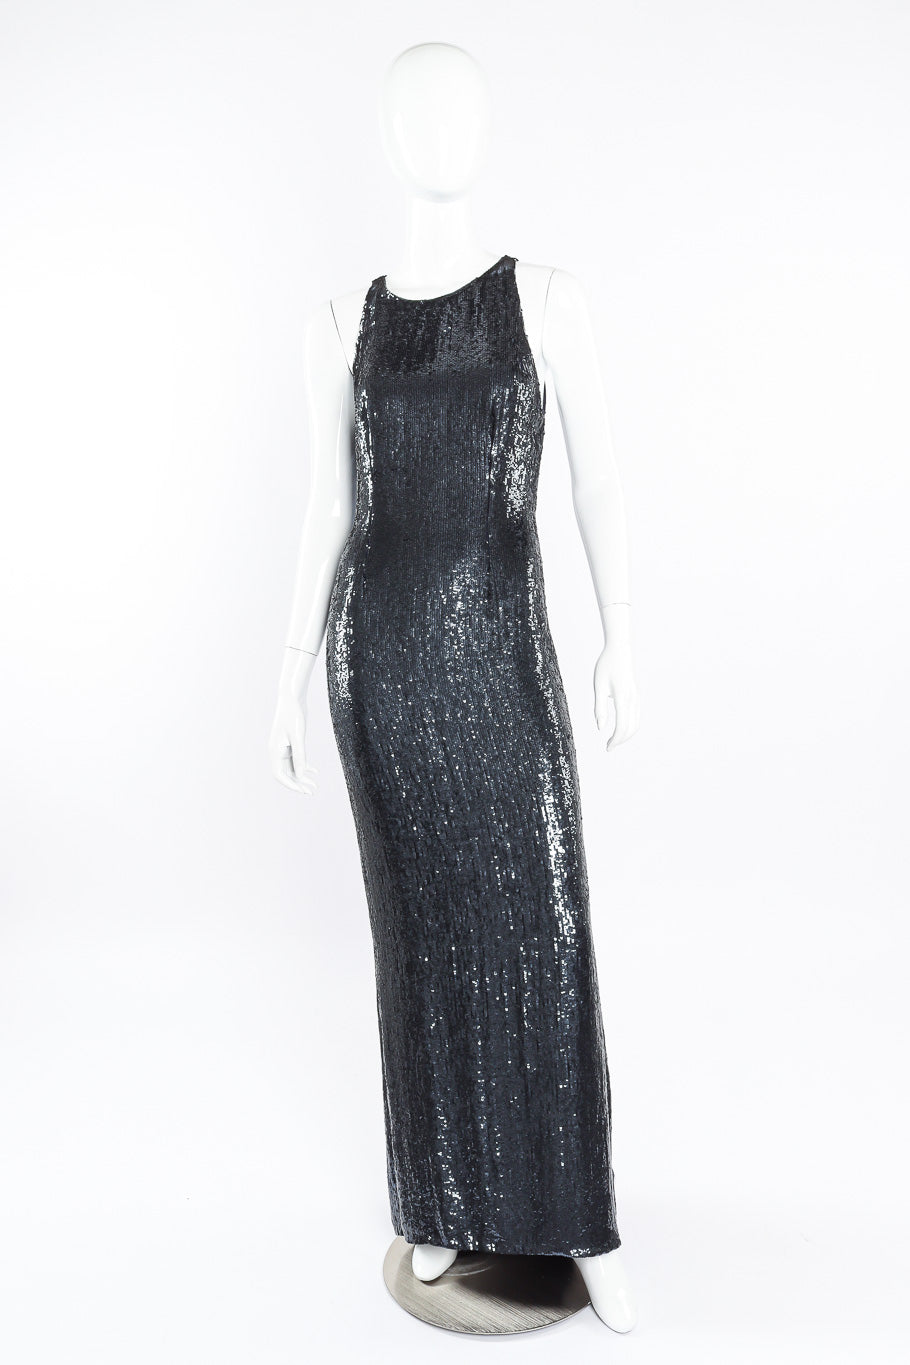 Sequin gown by Pamela Dennis on mannequin front @recessla